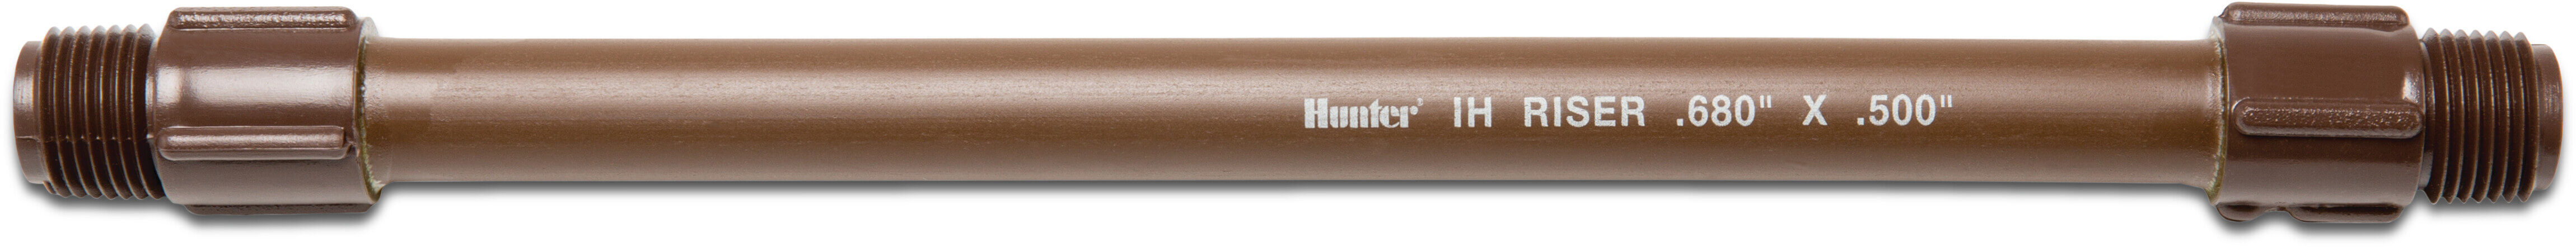 Hunter Baza zraszacza 1/2" 4.1bar 30cm type IH-12